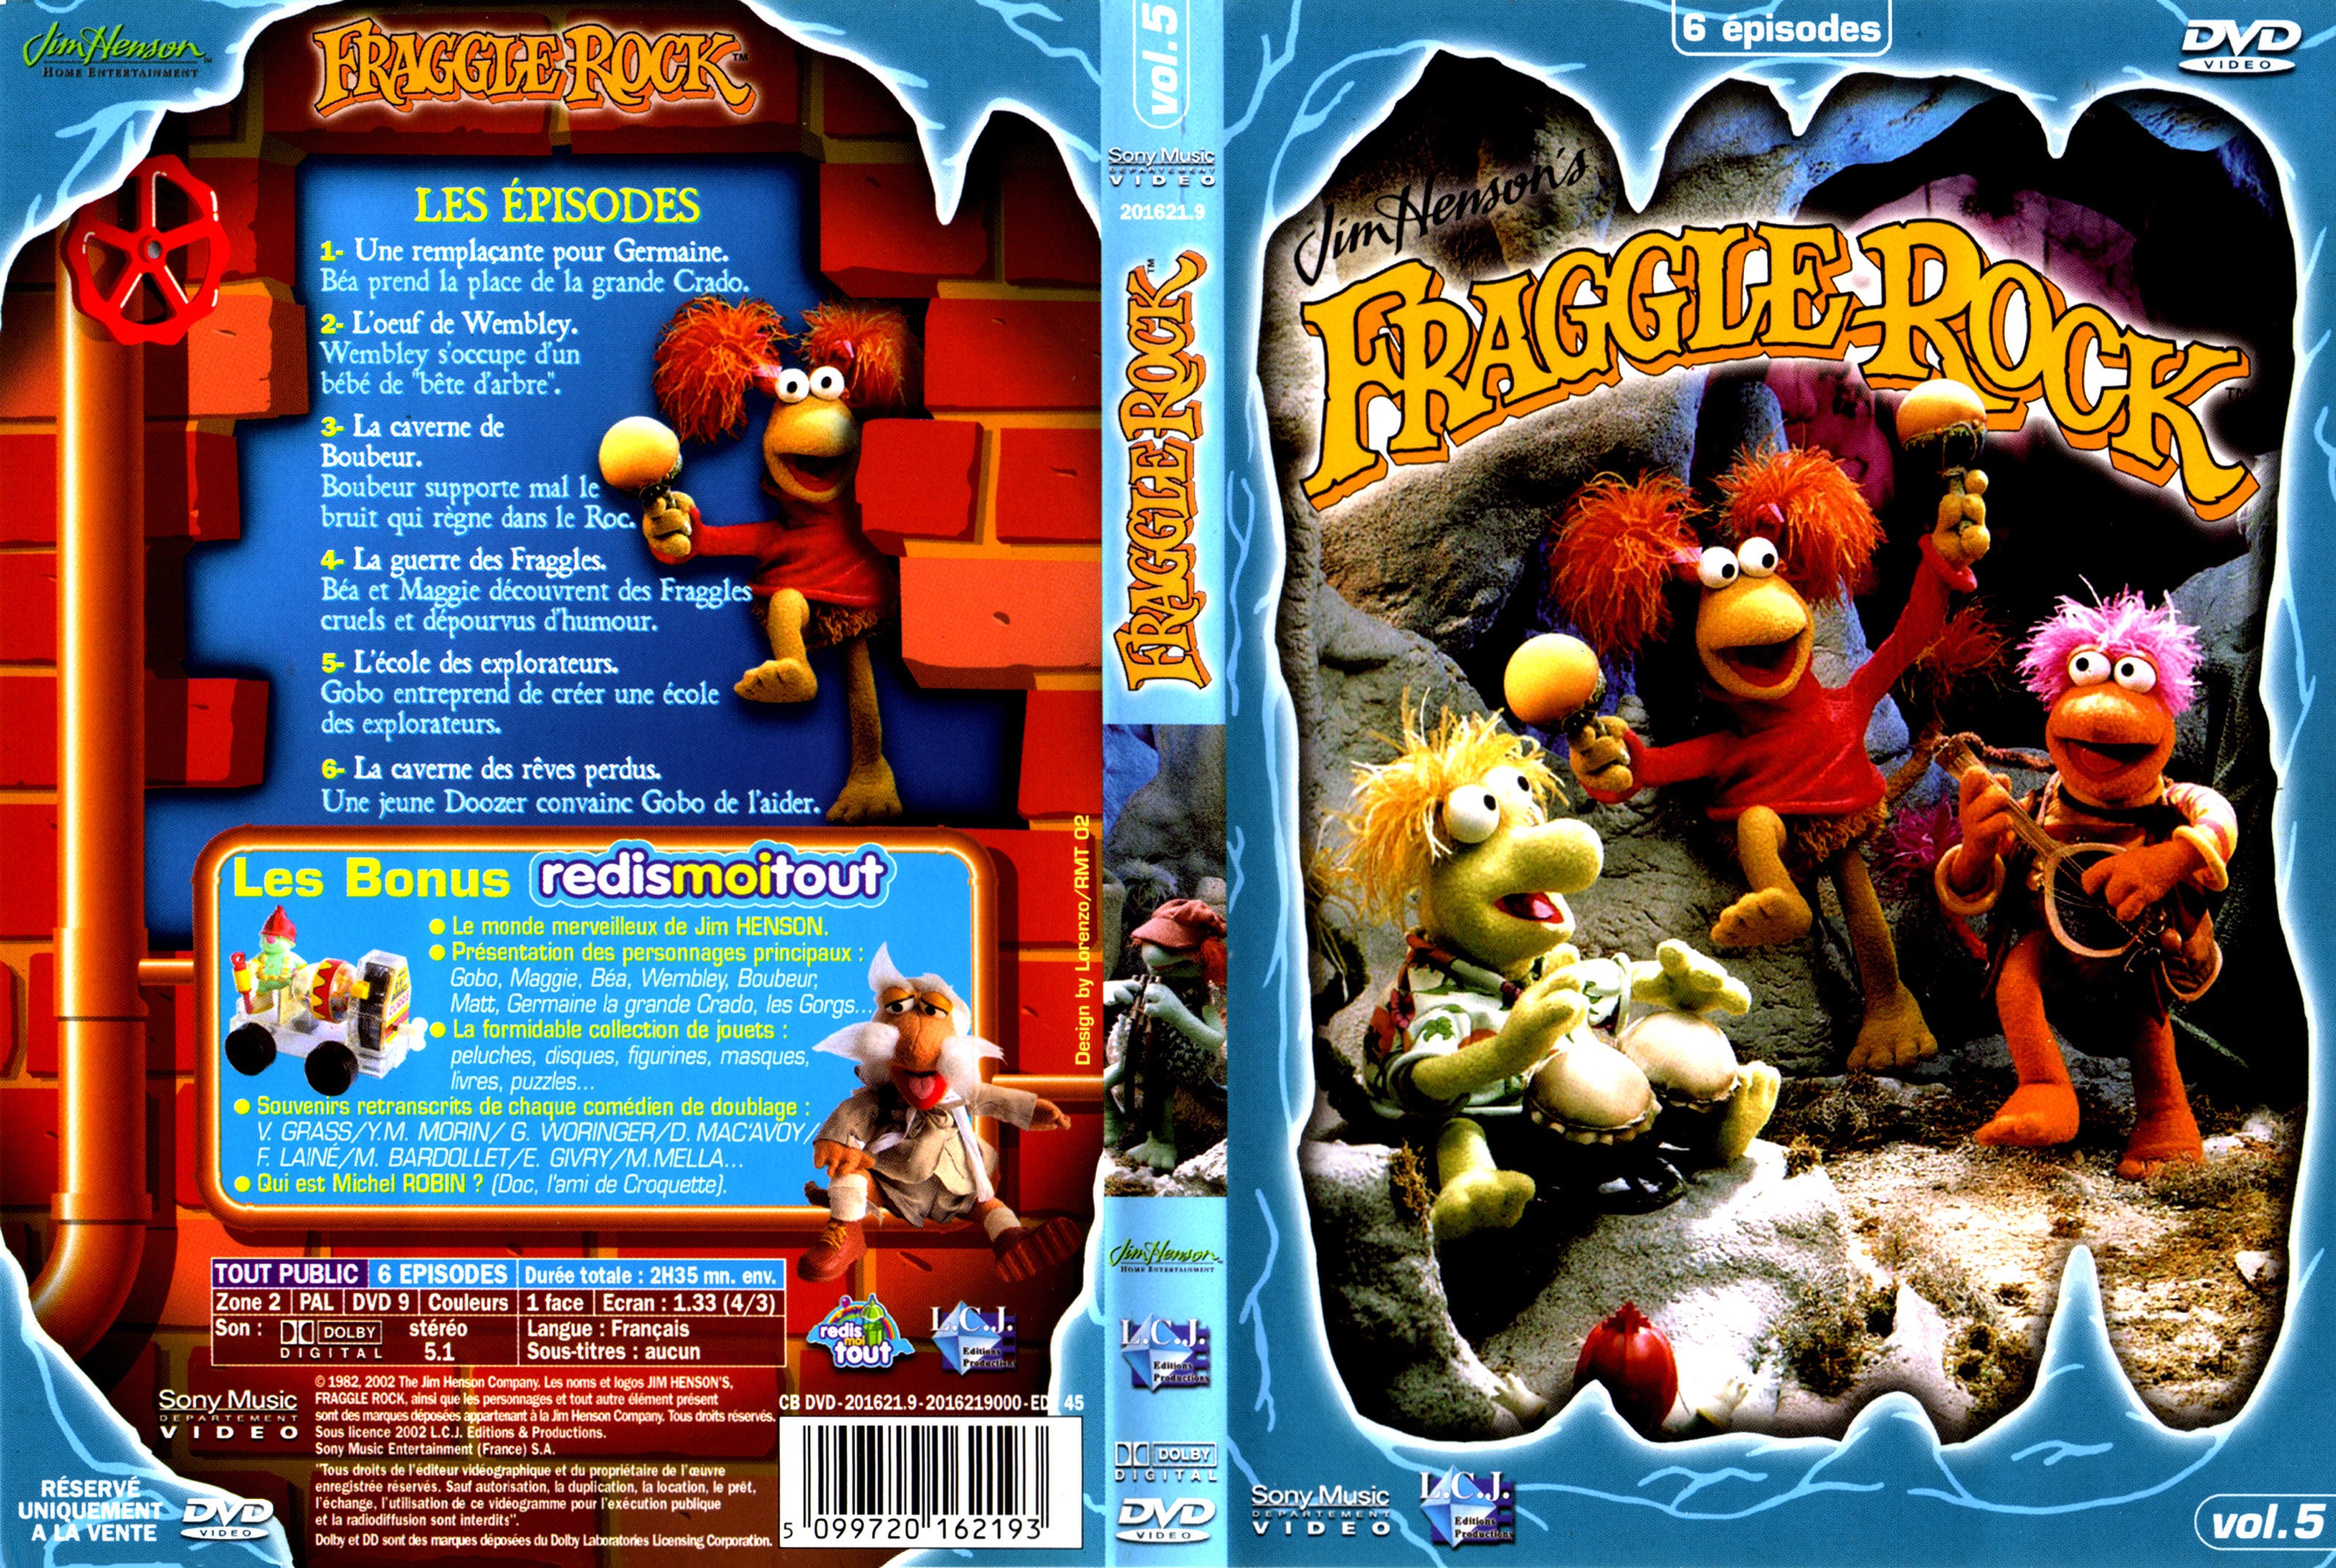 Jaquette DVD Fraggle rock vol 5